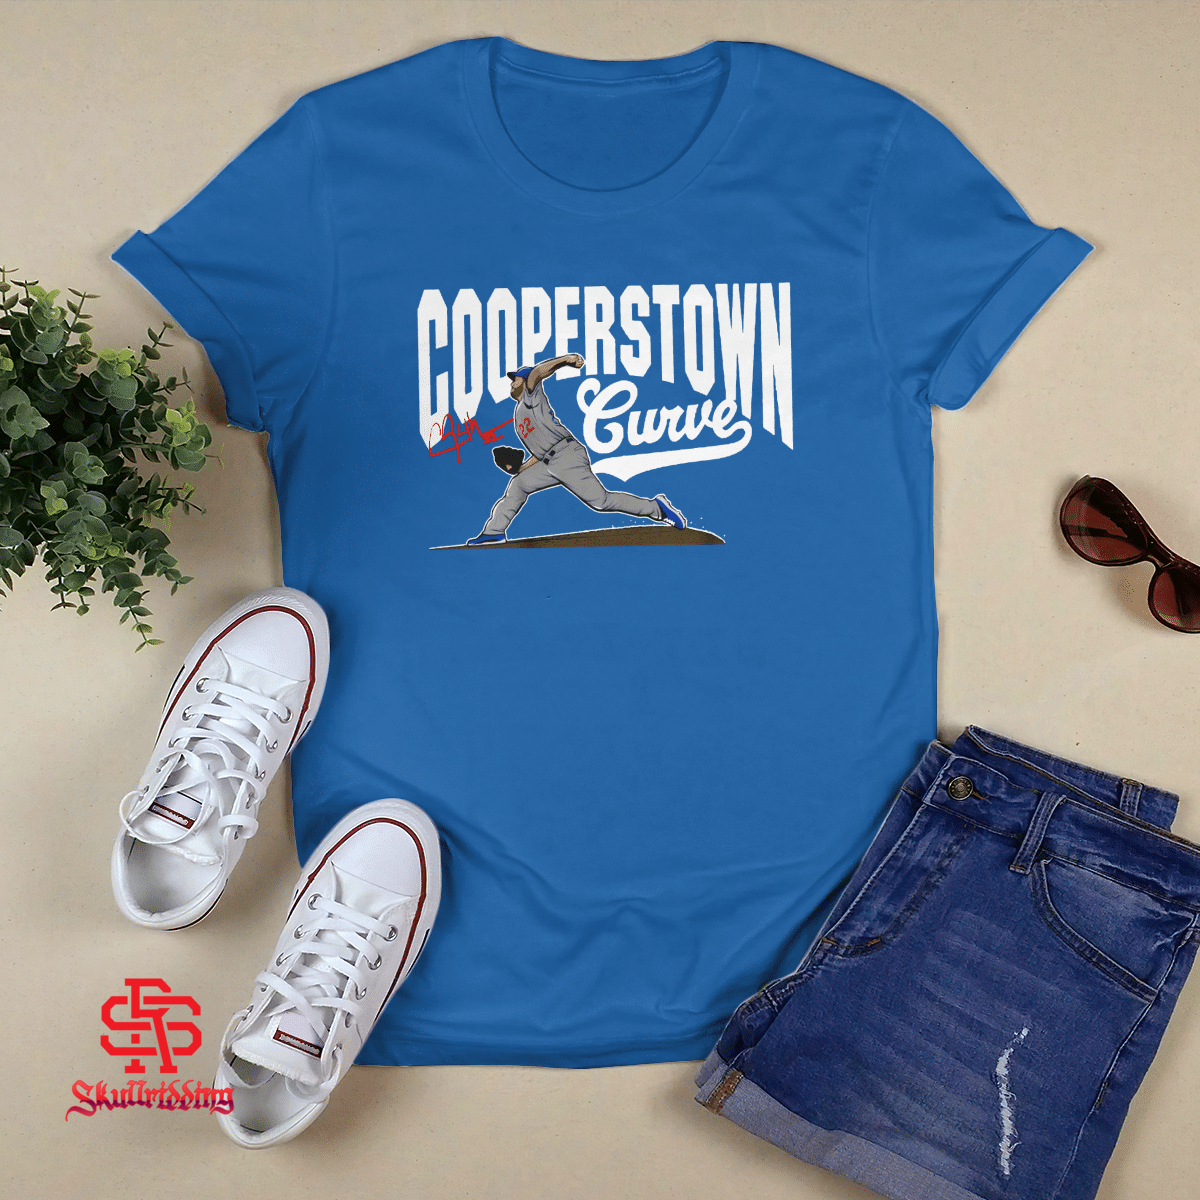 Clayton Kershaw: Cooperstown Curve - Los Angeles Dodgers